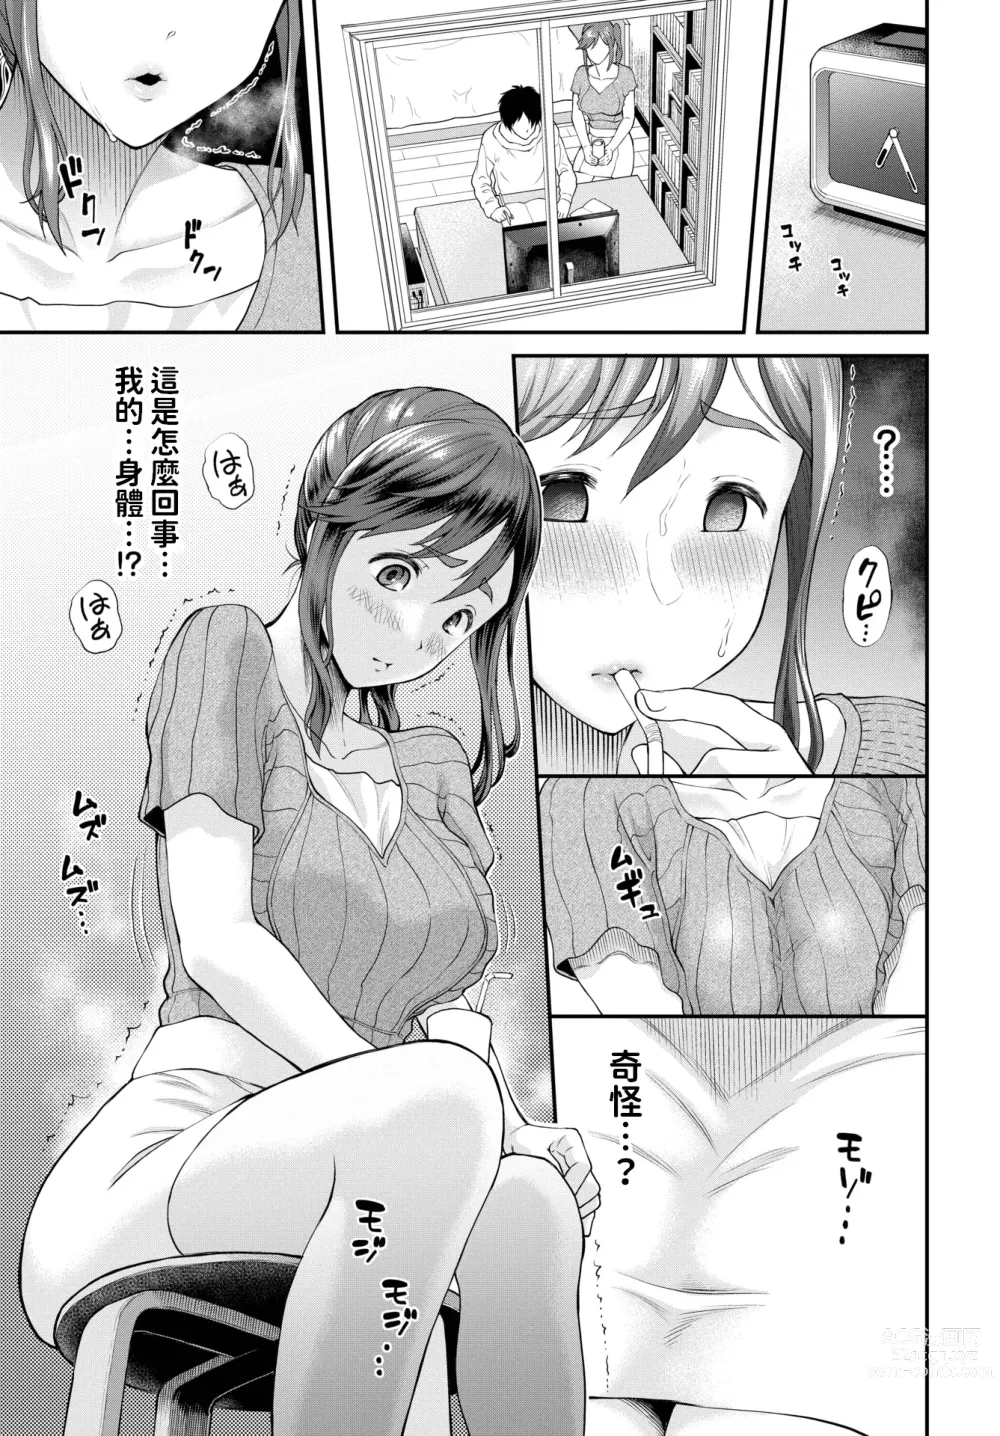 Page 3 of manga Kamimura-sensei ga Ochiru made